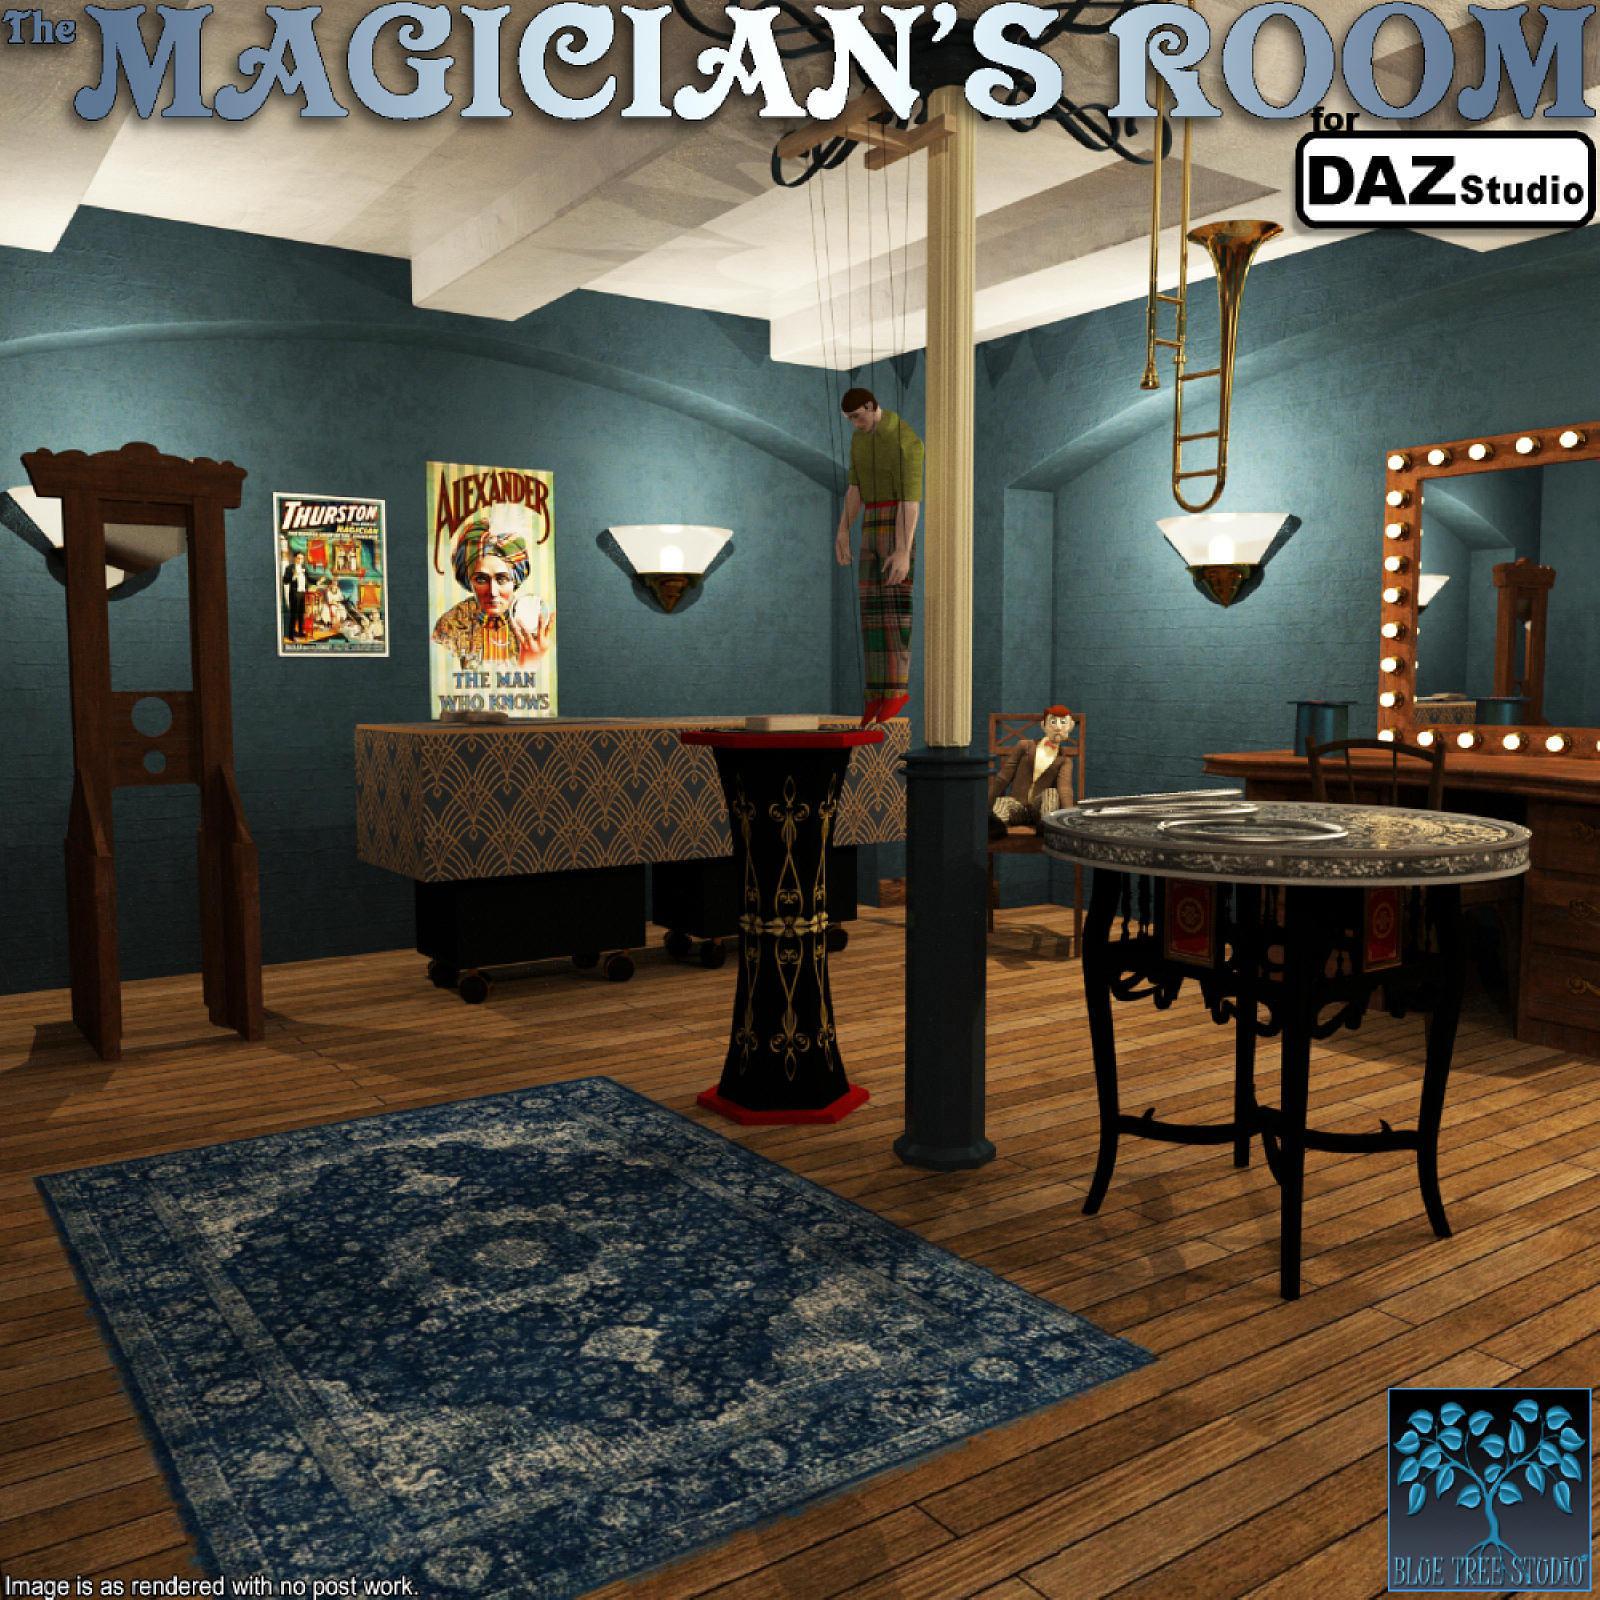 The Magician’s Room for DAZ Studio_DAZ3DDL